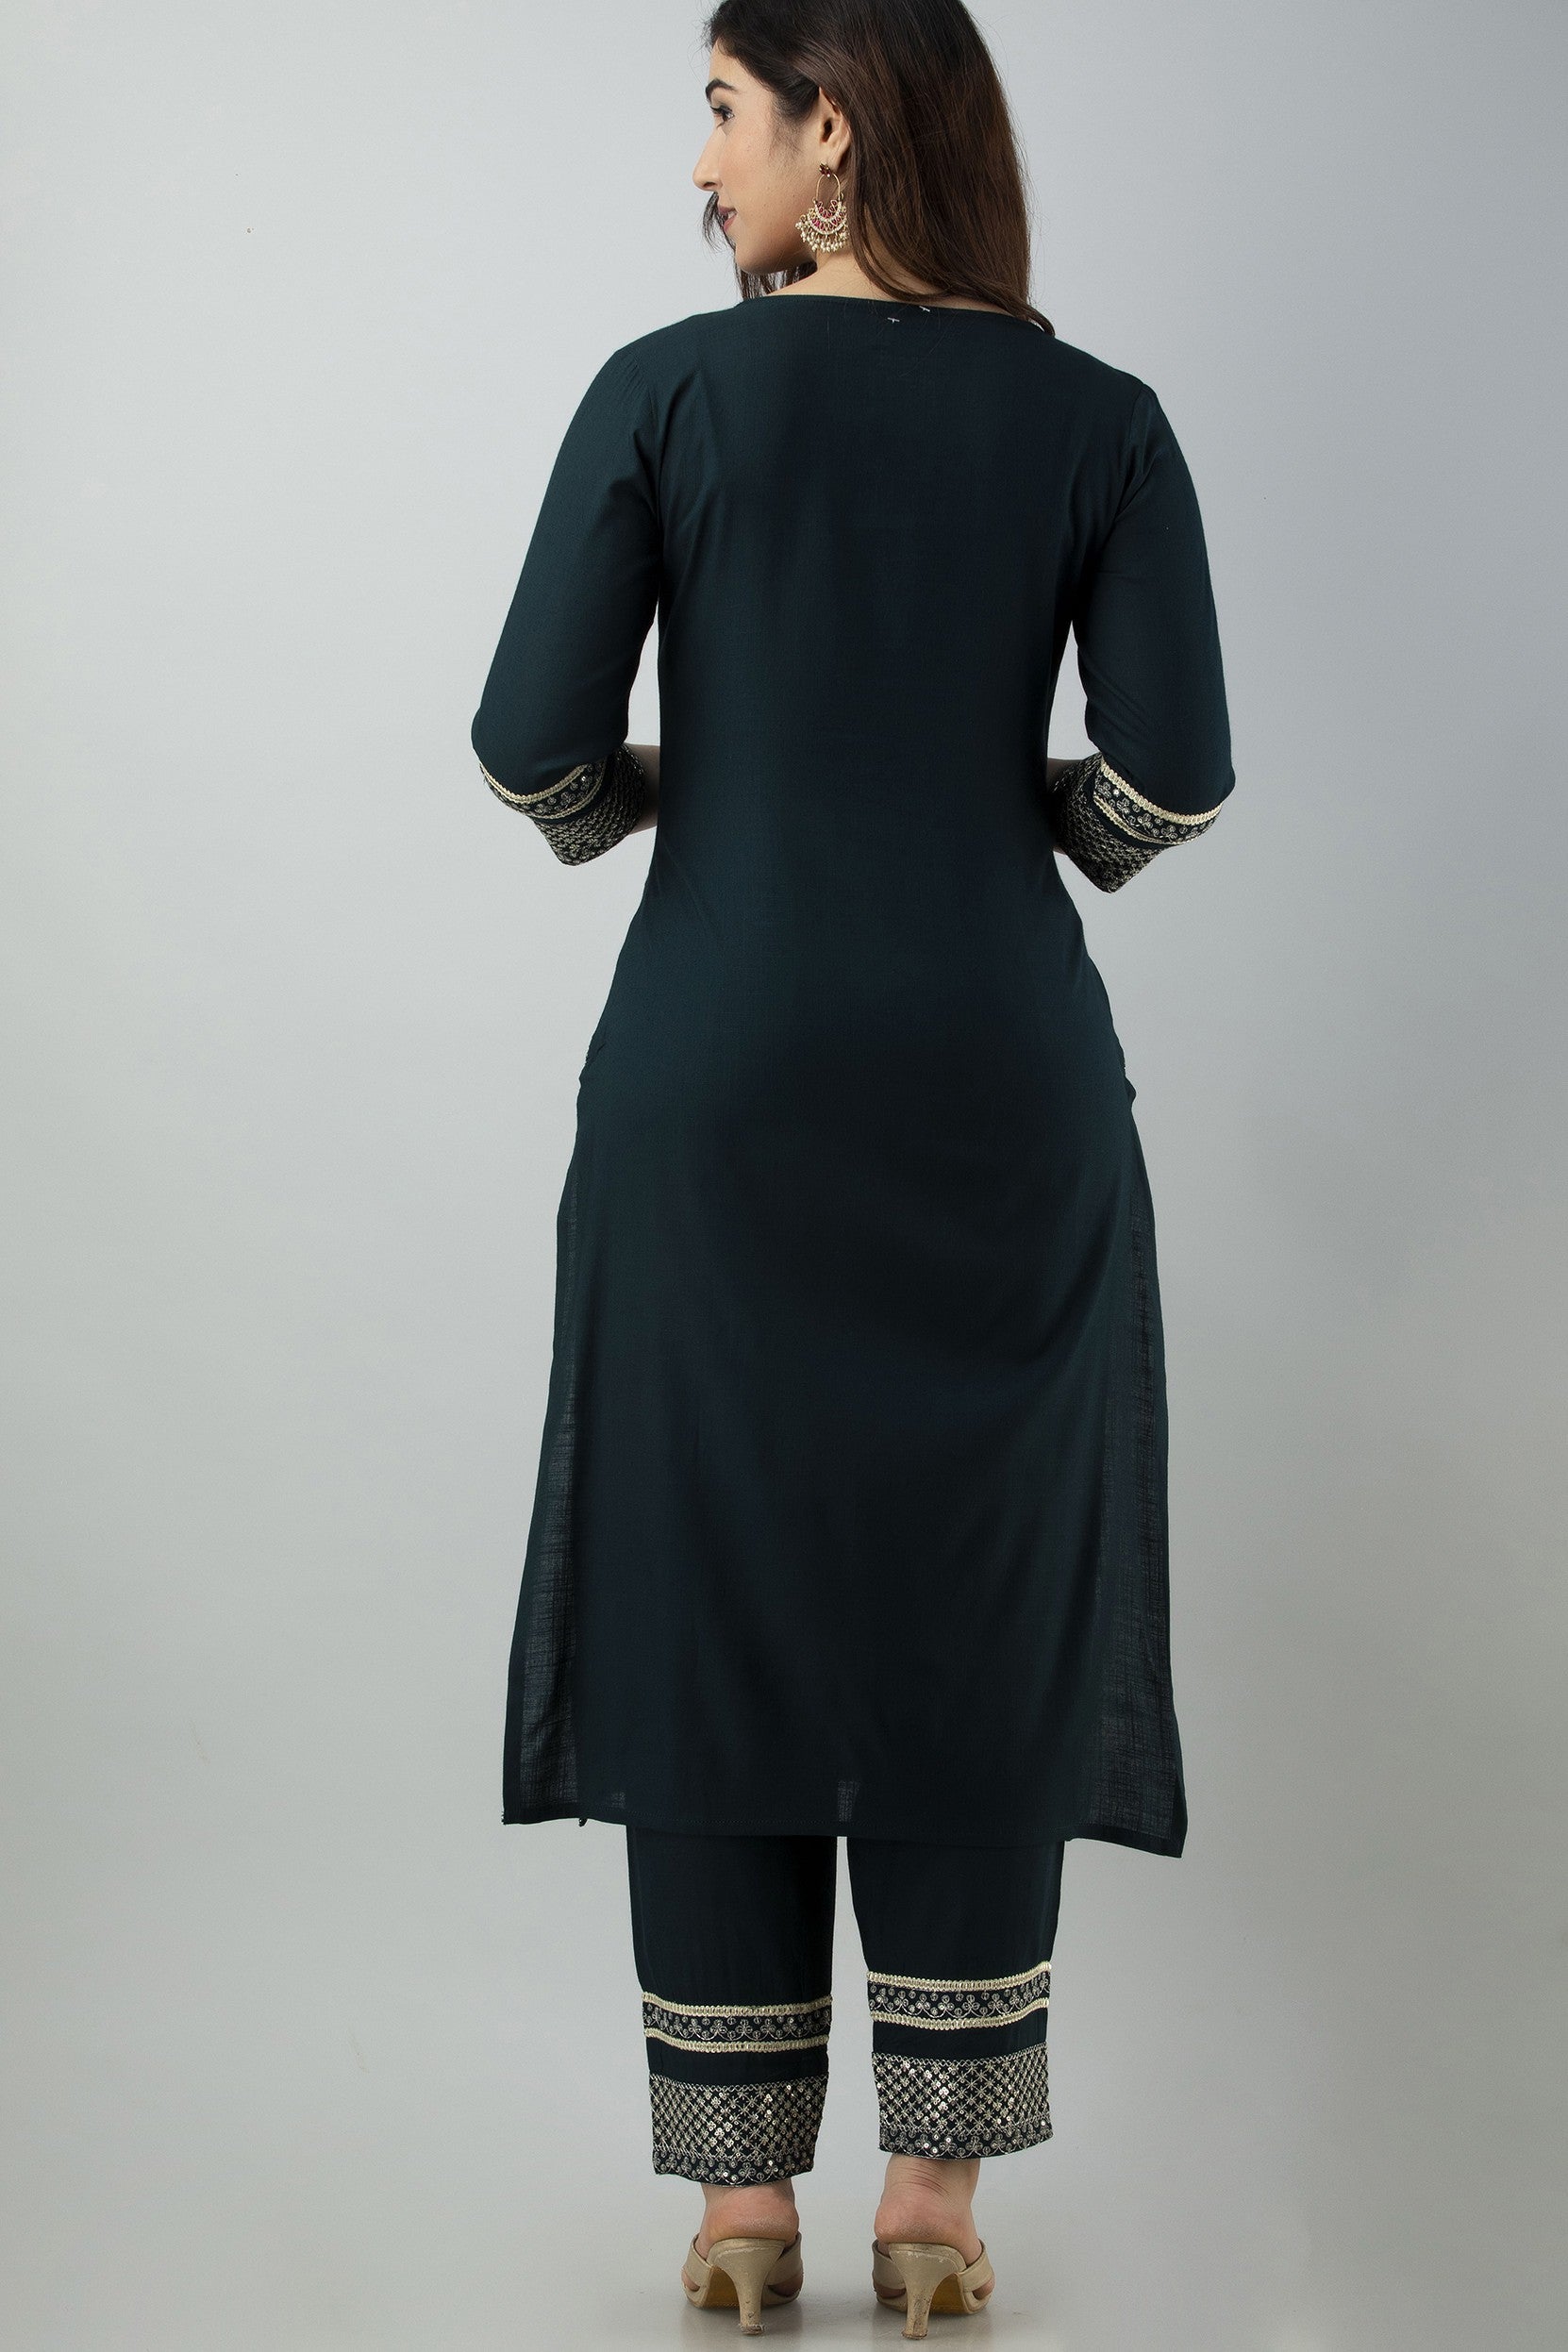 Women's Embroidered Viscose Rayon Straight Kurta Pant Set (Teal) - Charu